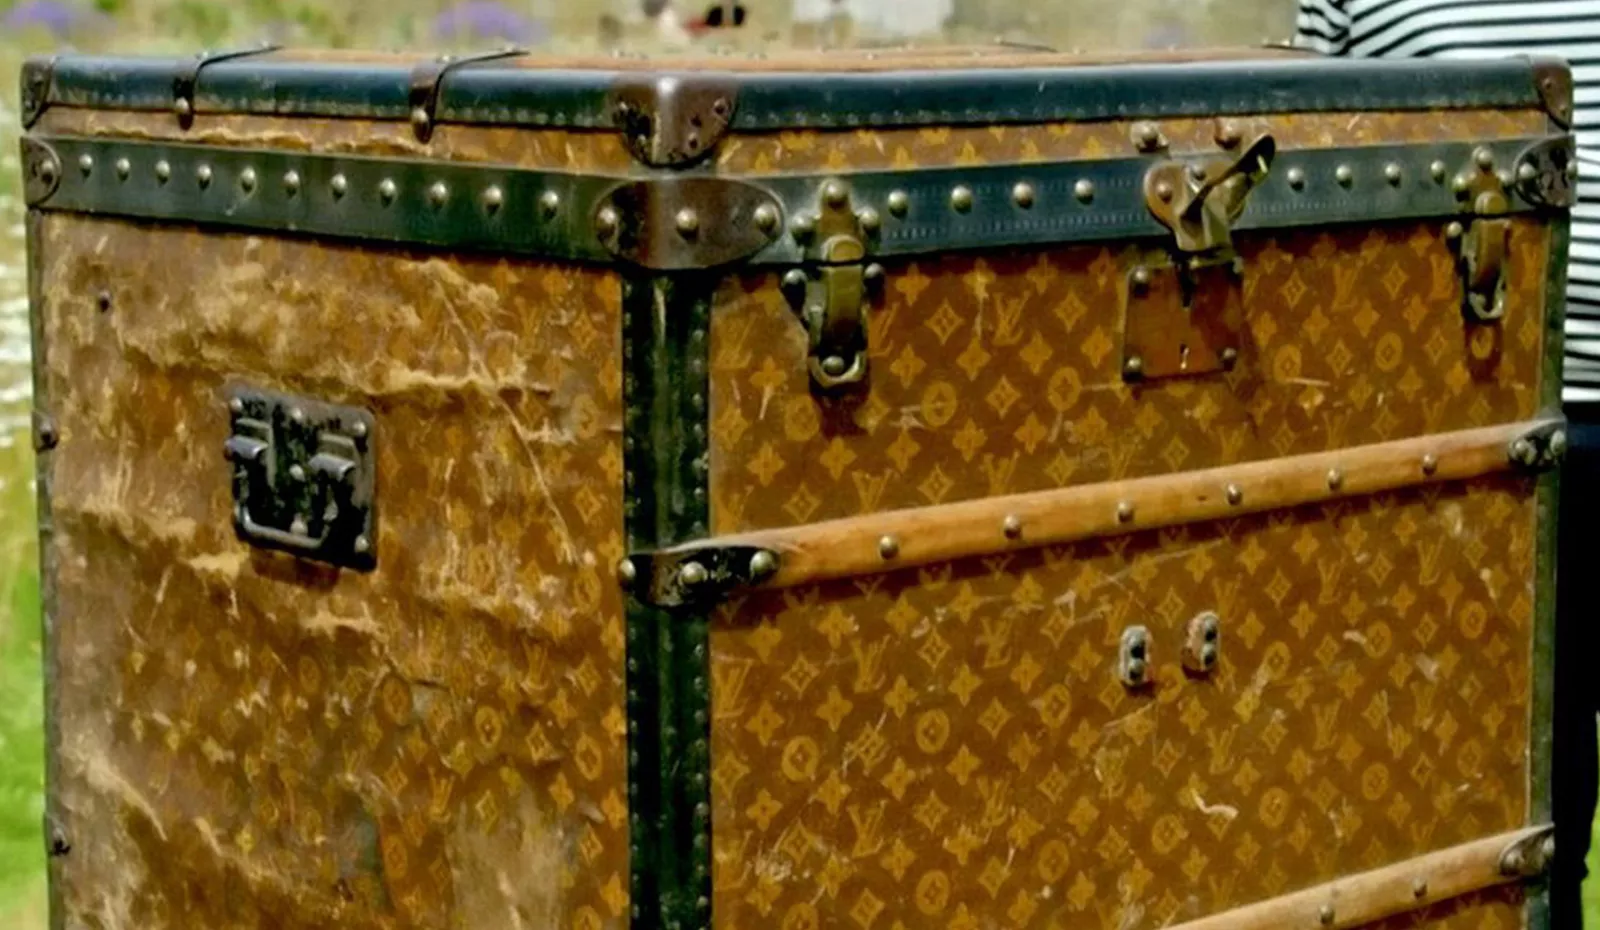 Louis Vuitton Large Storage Box – My Haute